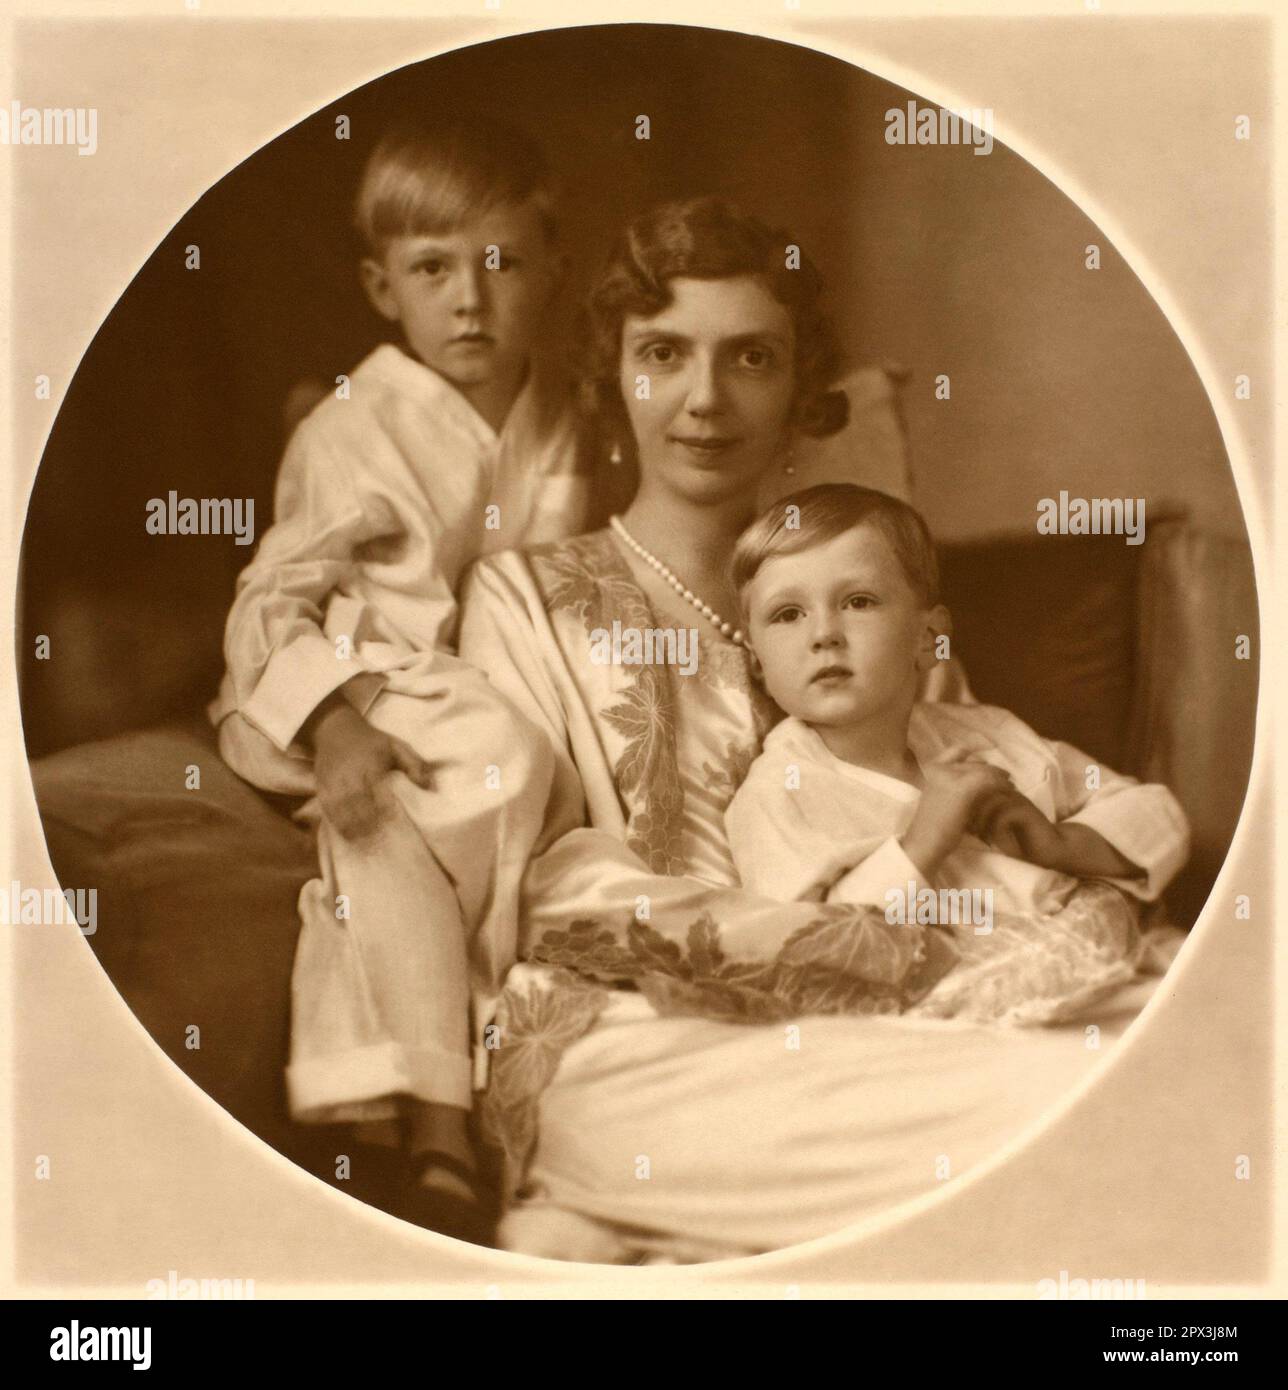 1932 c., Roma , ITALIA : la princesa italiana MAFALDA di SAVOIA ( 1902 - 1944 ), casada con el príncipe alemán Filippo d' Assia Kassel ( Philipp de HESSE ), en esta foto con sus hijos : MORITZ ( Maurizio , 1926 - 2013 ) y HENRICH ( Enrico , 1927 - 1999 ). Mafalda fue hija del rey de Italia VITTORIO EMANUELE III y de la reina ELENA (Helene del Montenegro). Foto de EVA BARRETT ( 1879 - 1950 ). - SABOYA - principessa - ITALIA - personalità celebrità da BAMBINI - da piccolo da piccoli piccola - bambino - NIÑO - INFANCIA - INFANZIA - CELEBRIDAD DE LA PERSONALIDAD - personalidades celebridades cuando fue CHI Foto de stock